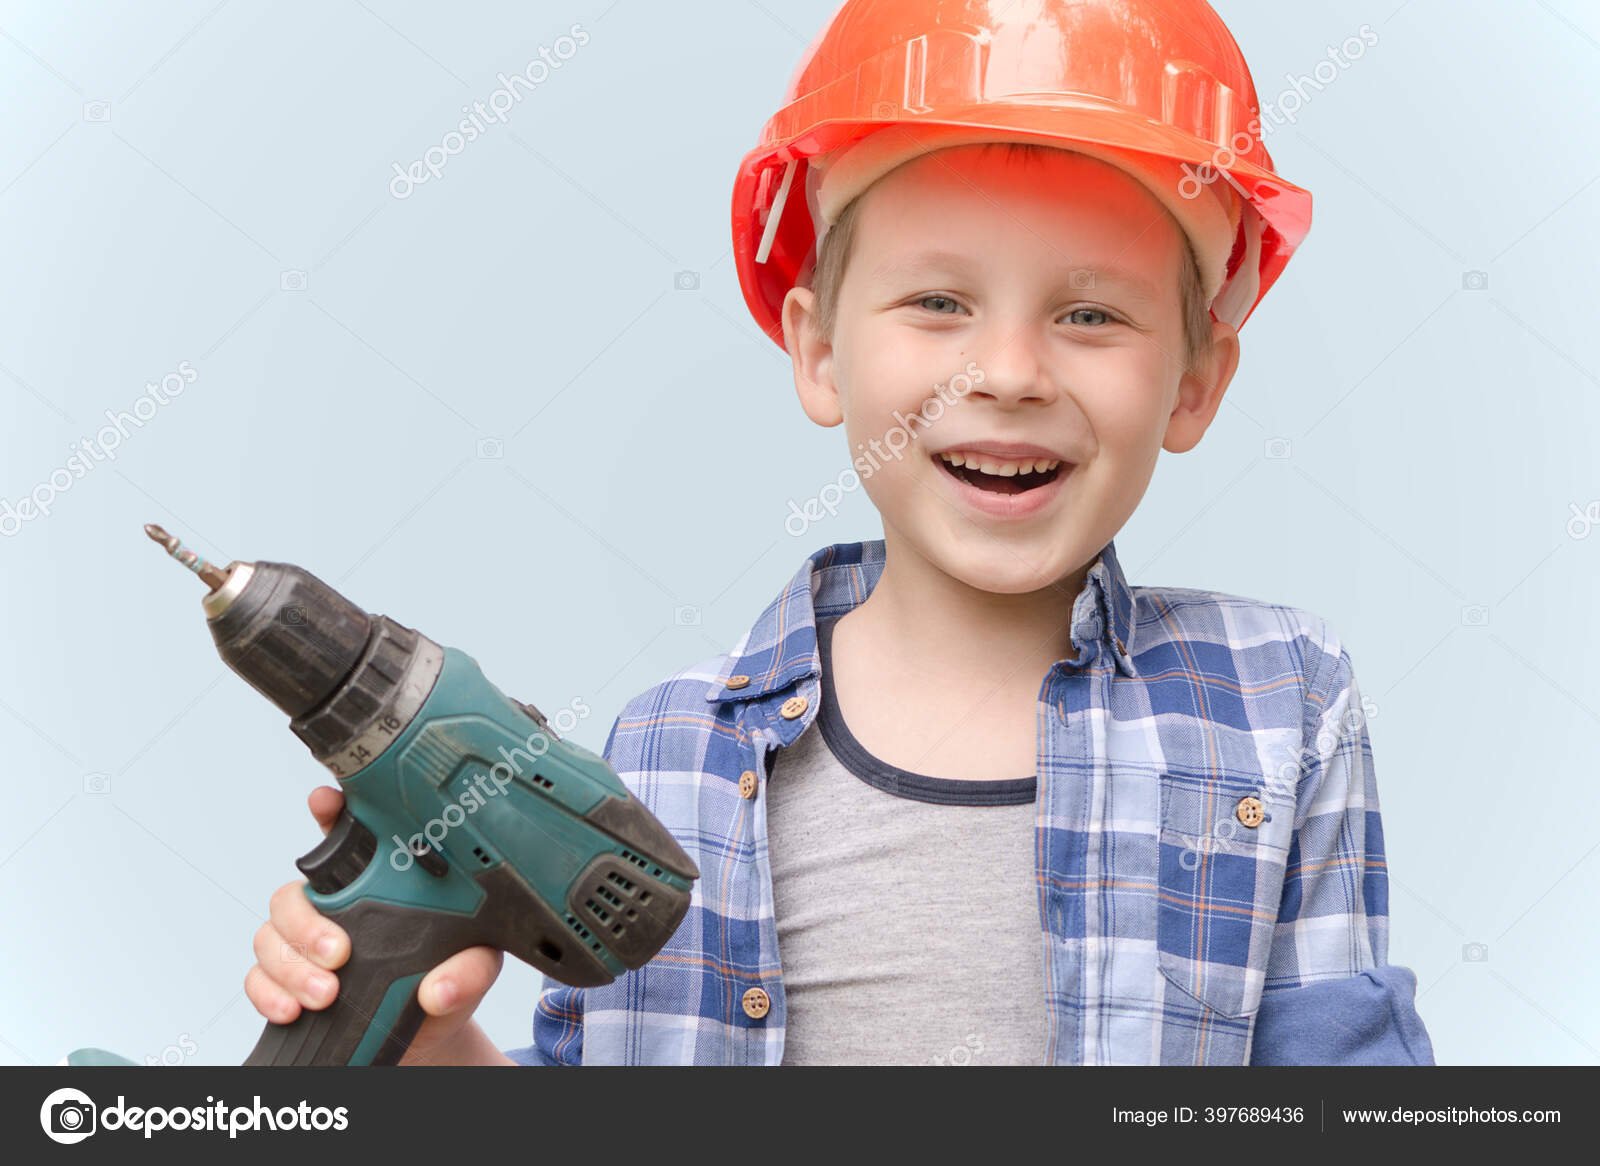 https://st4.depositphotos.com/31947356/39768/i/1600/depositphotos_397689436-stock-photo-cheerful-happy-child-construction-orange.jpg